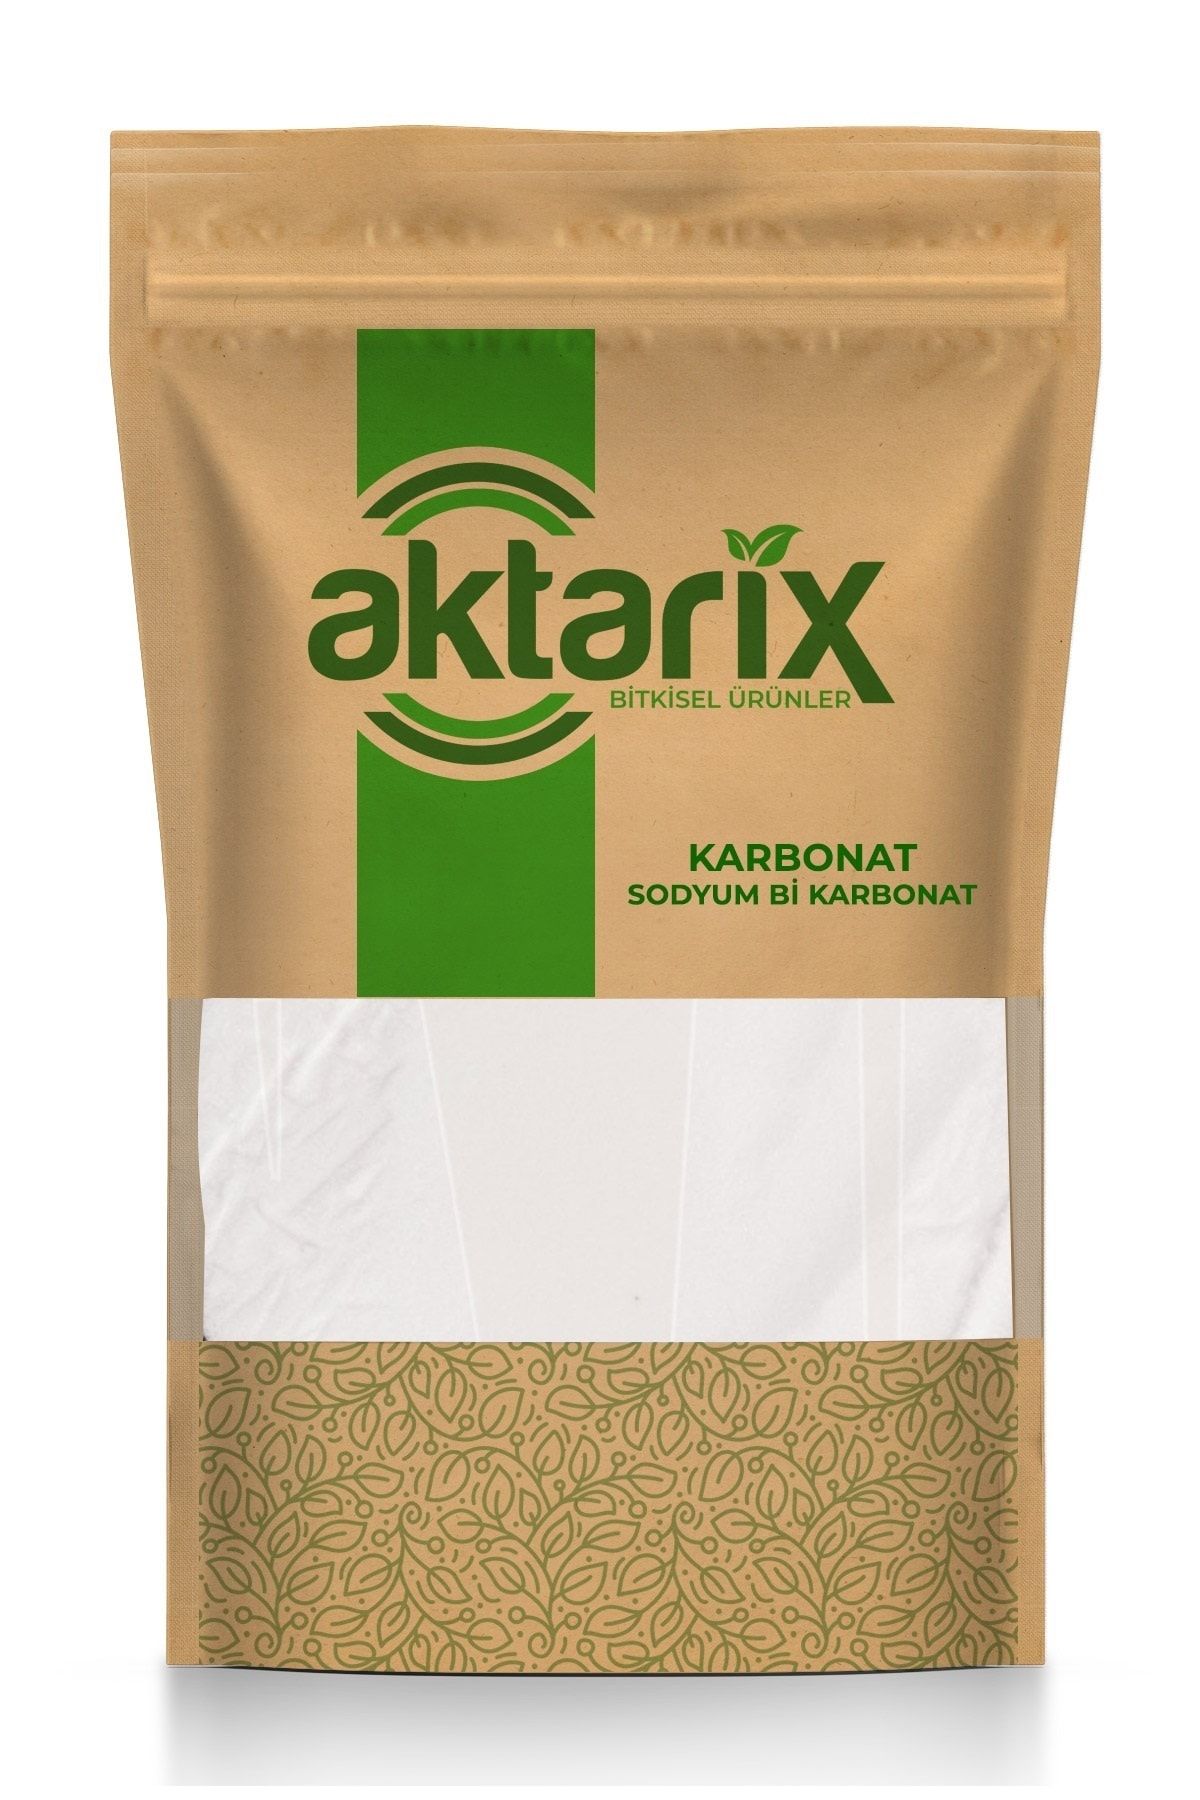 aktarix 2 Kg Karbonat / Gıda Tipi Içilebilir - Sodyum Bi Karbonat